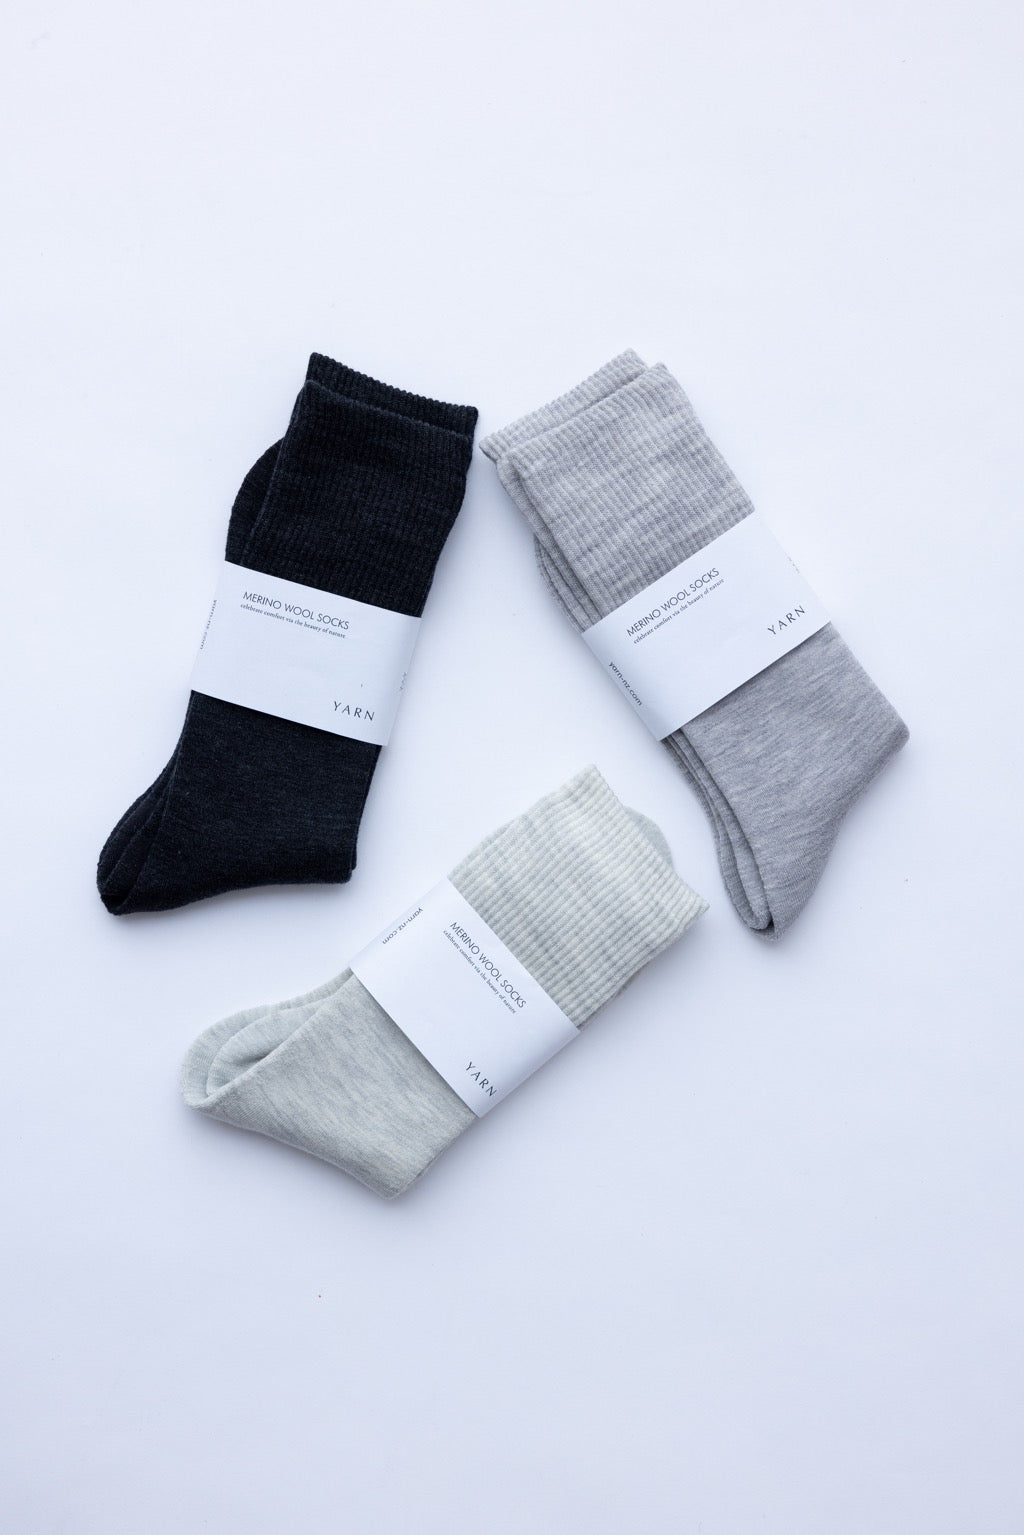 merino  wool  socks - YARN nz